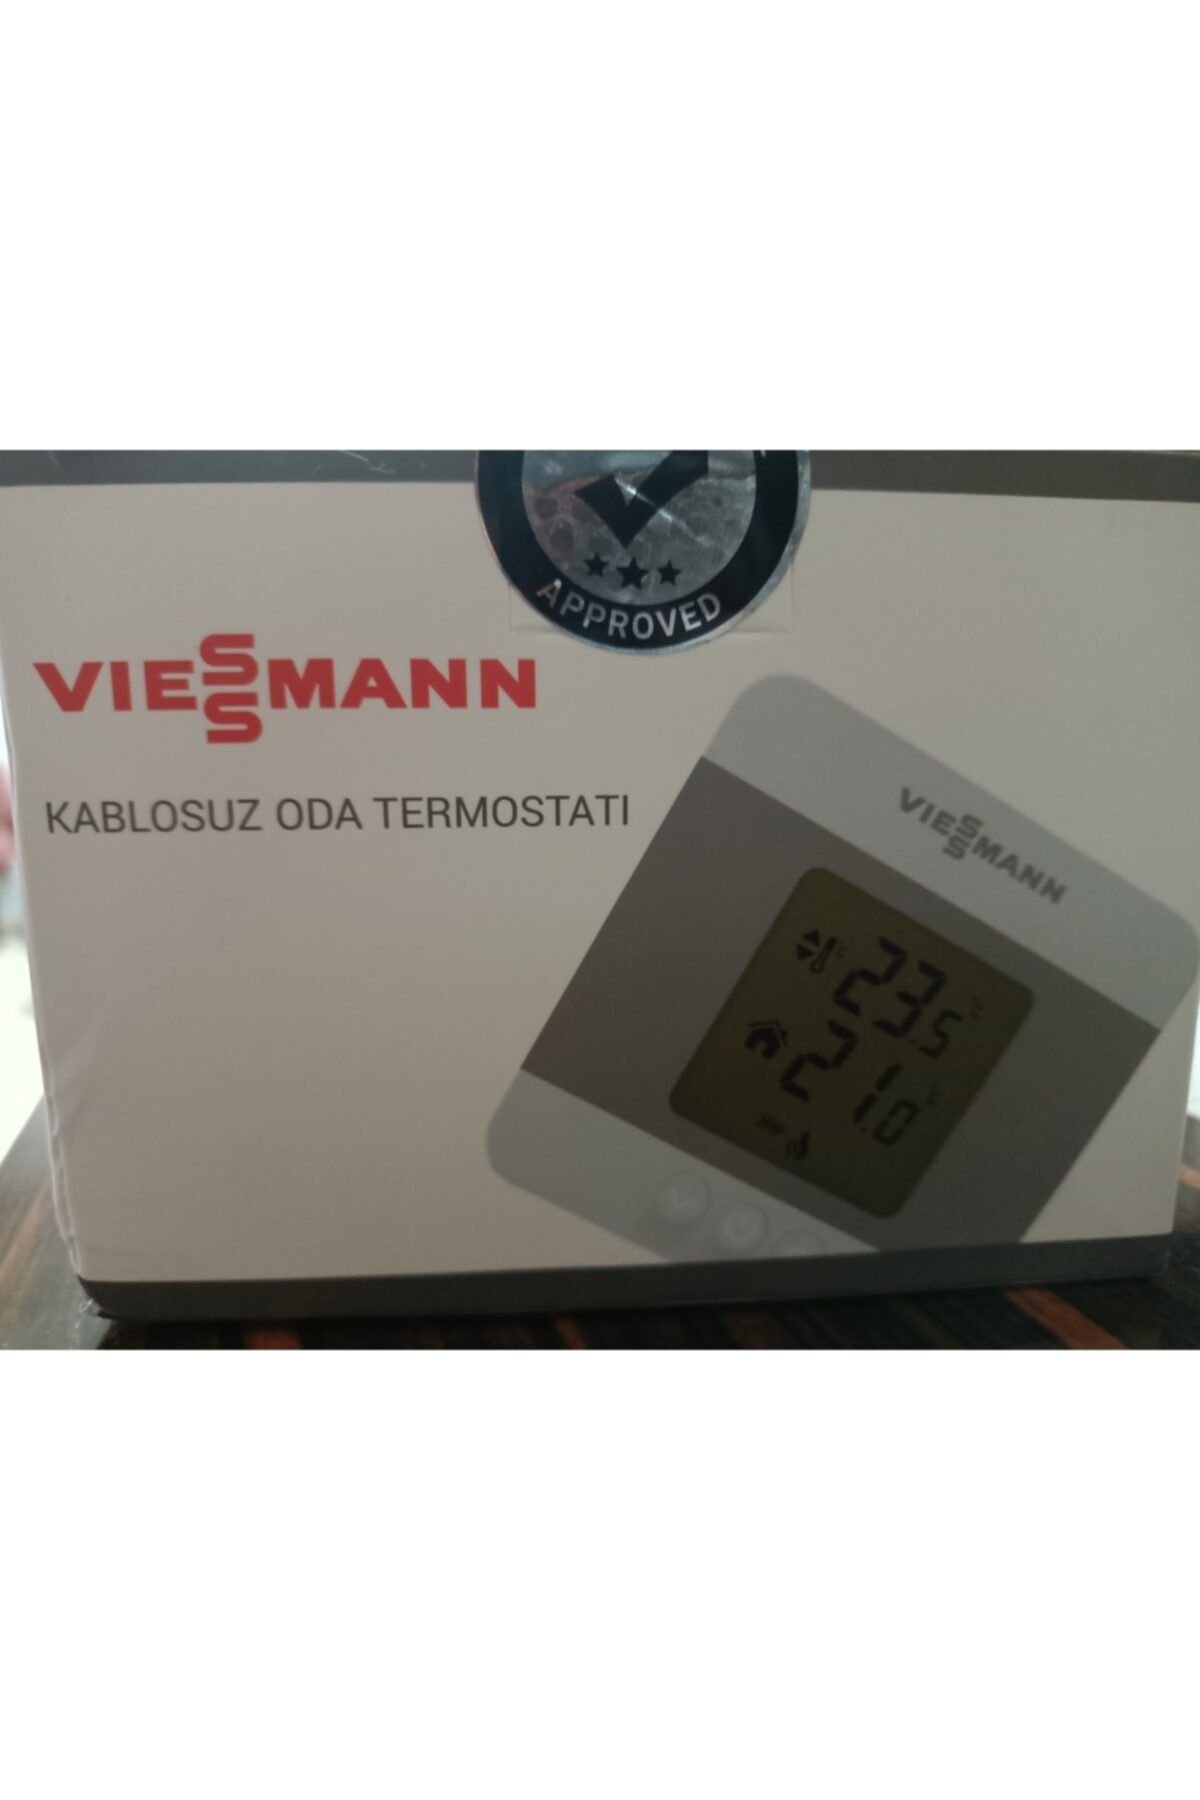 Viessmann Kablosuz Dijitaloda Termostatı